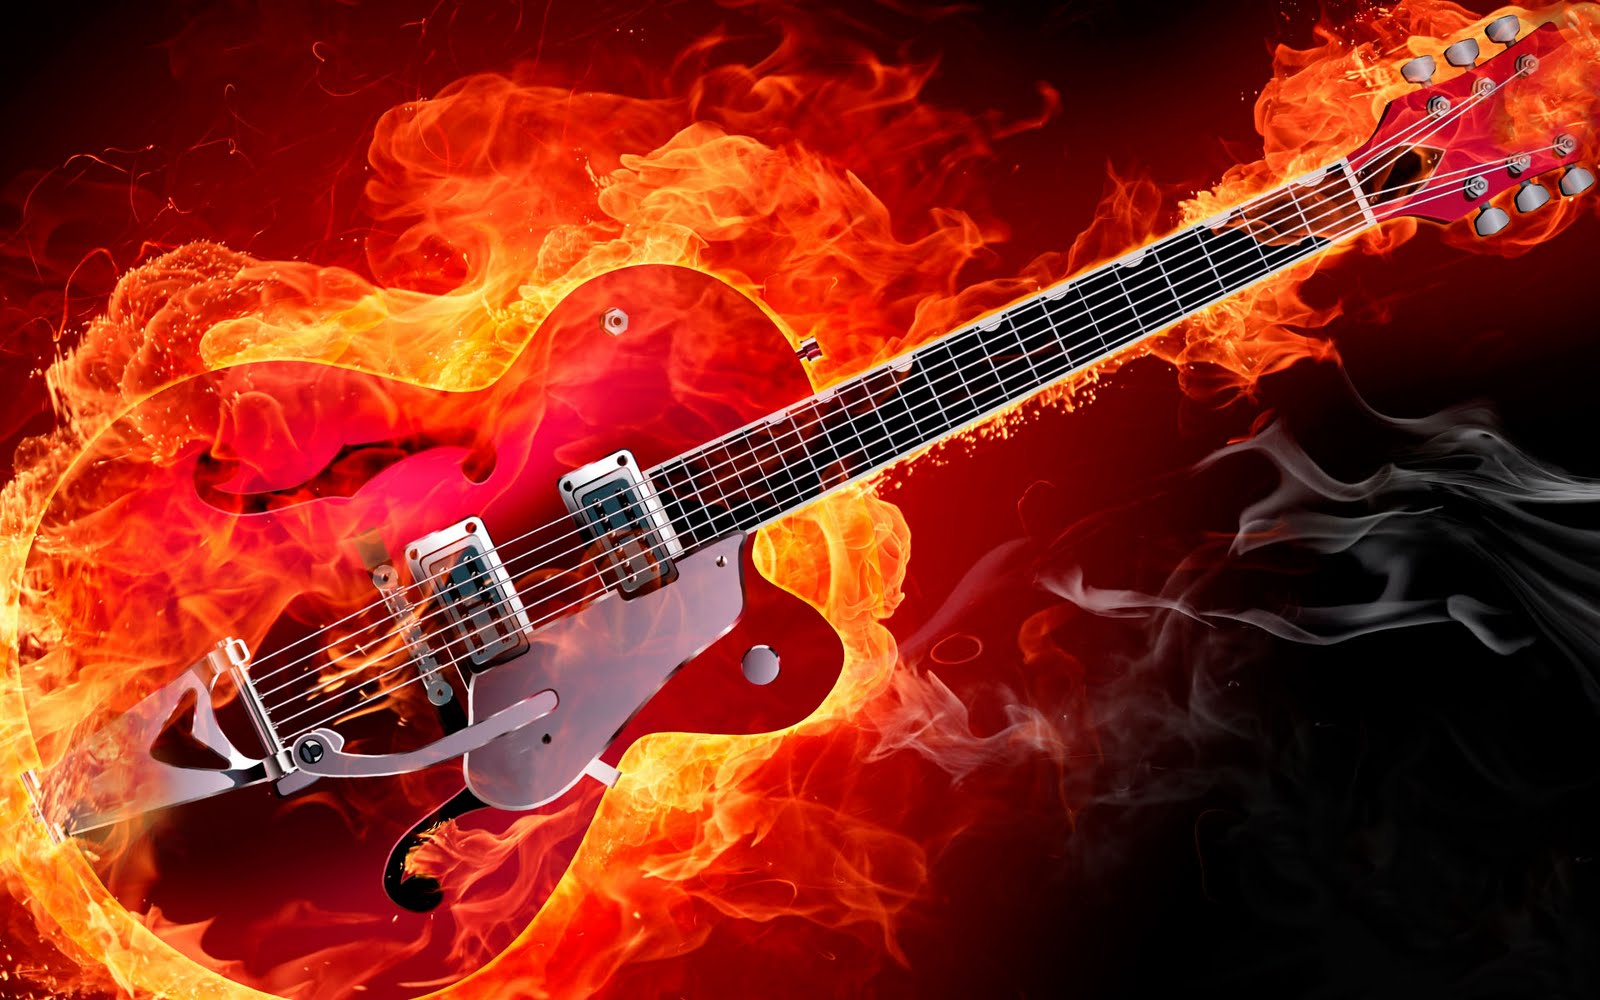 http://1.bp.blogspot.com/-wX8Wmb2nM-w/Tfk0lCOjHJI/AAAAAAAAAn0/OfwizLX8Z8A/s1600/Electric+Rockabilly+Guitar+on+Fire+Red+Smoke+Flames+HD+Music+Desktop+Wallpaper+1920x1200+Great+Guitar+Sound+www.GreatGuitarSound.jpg